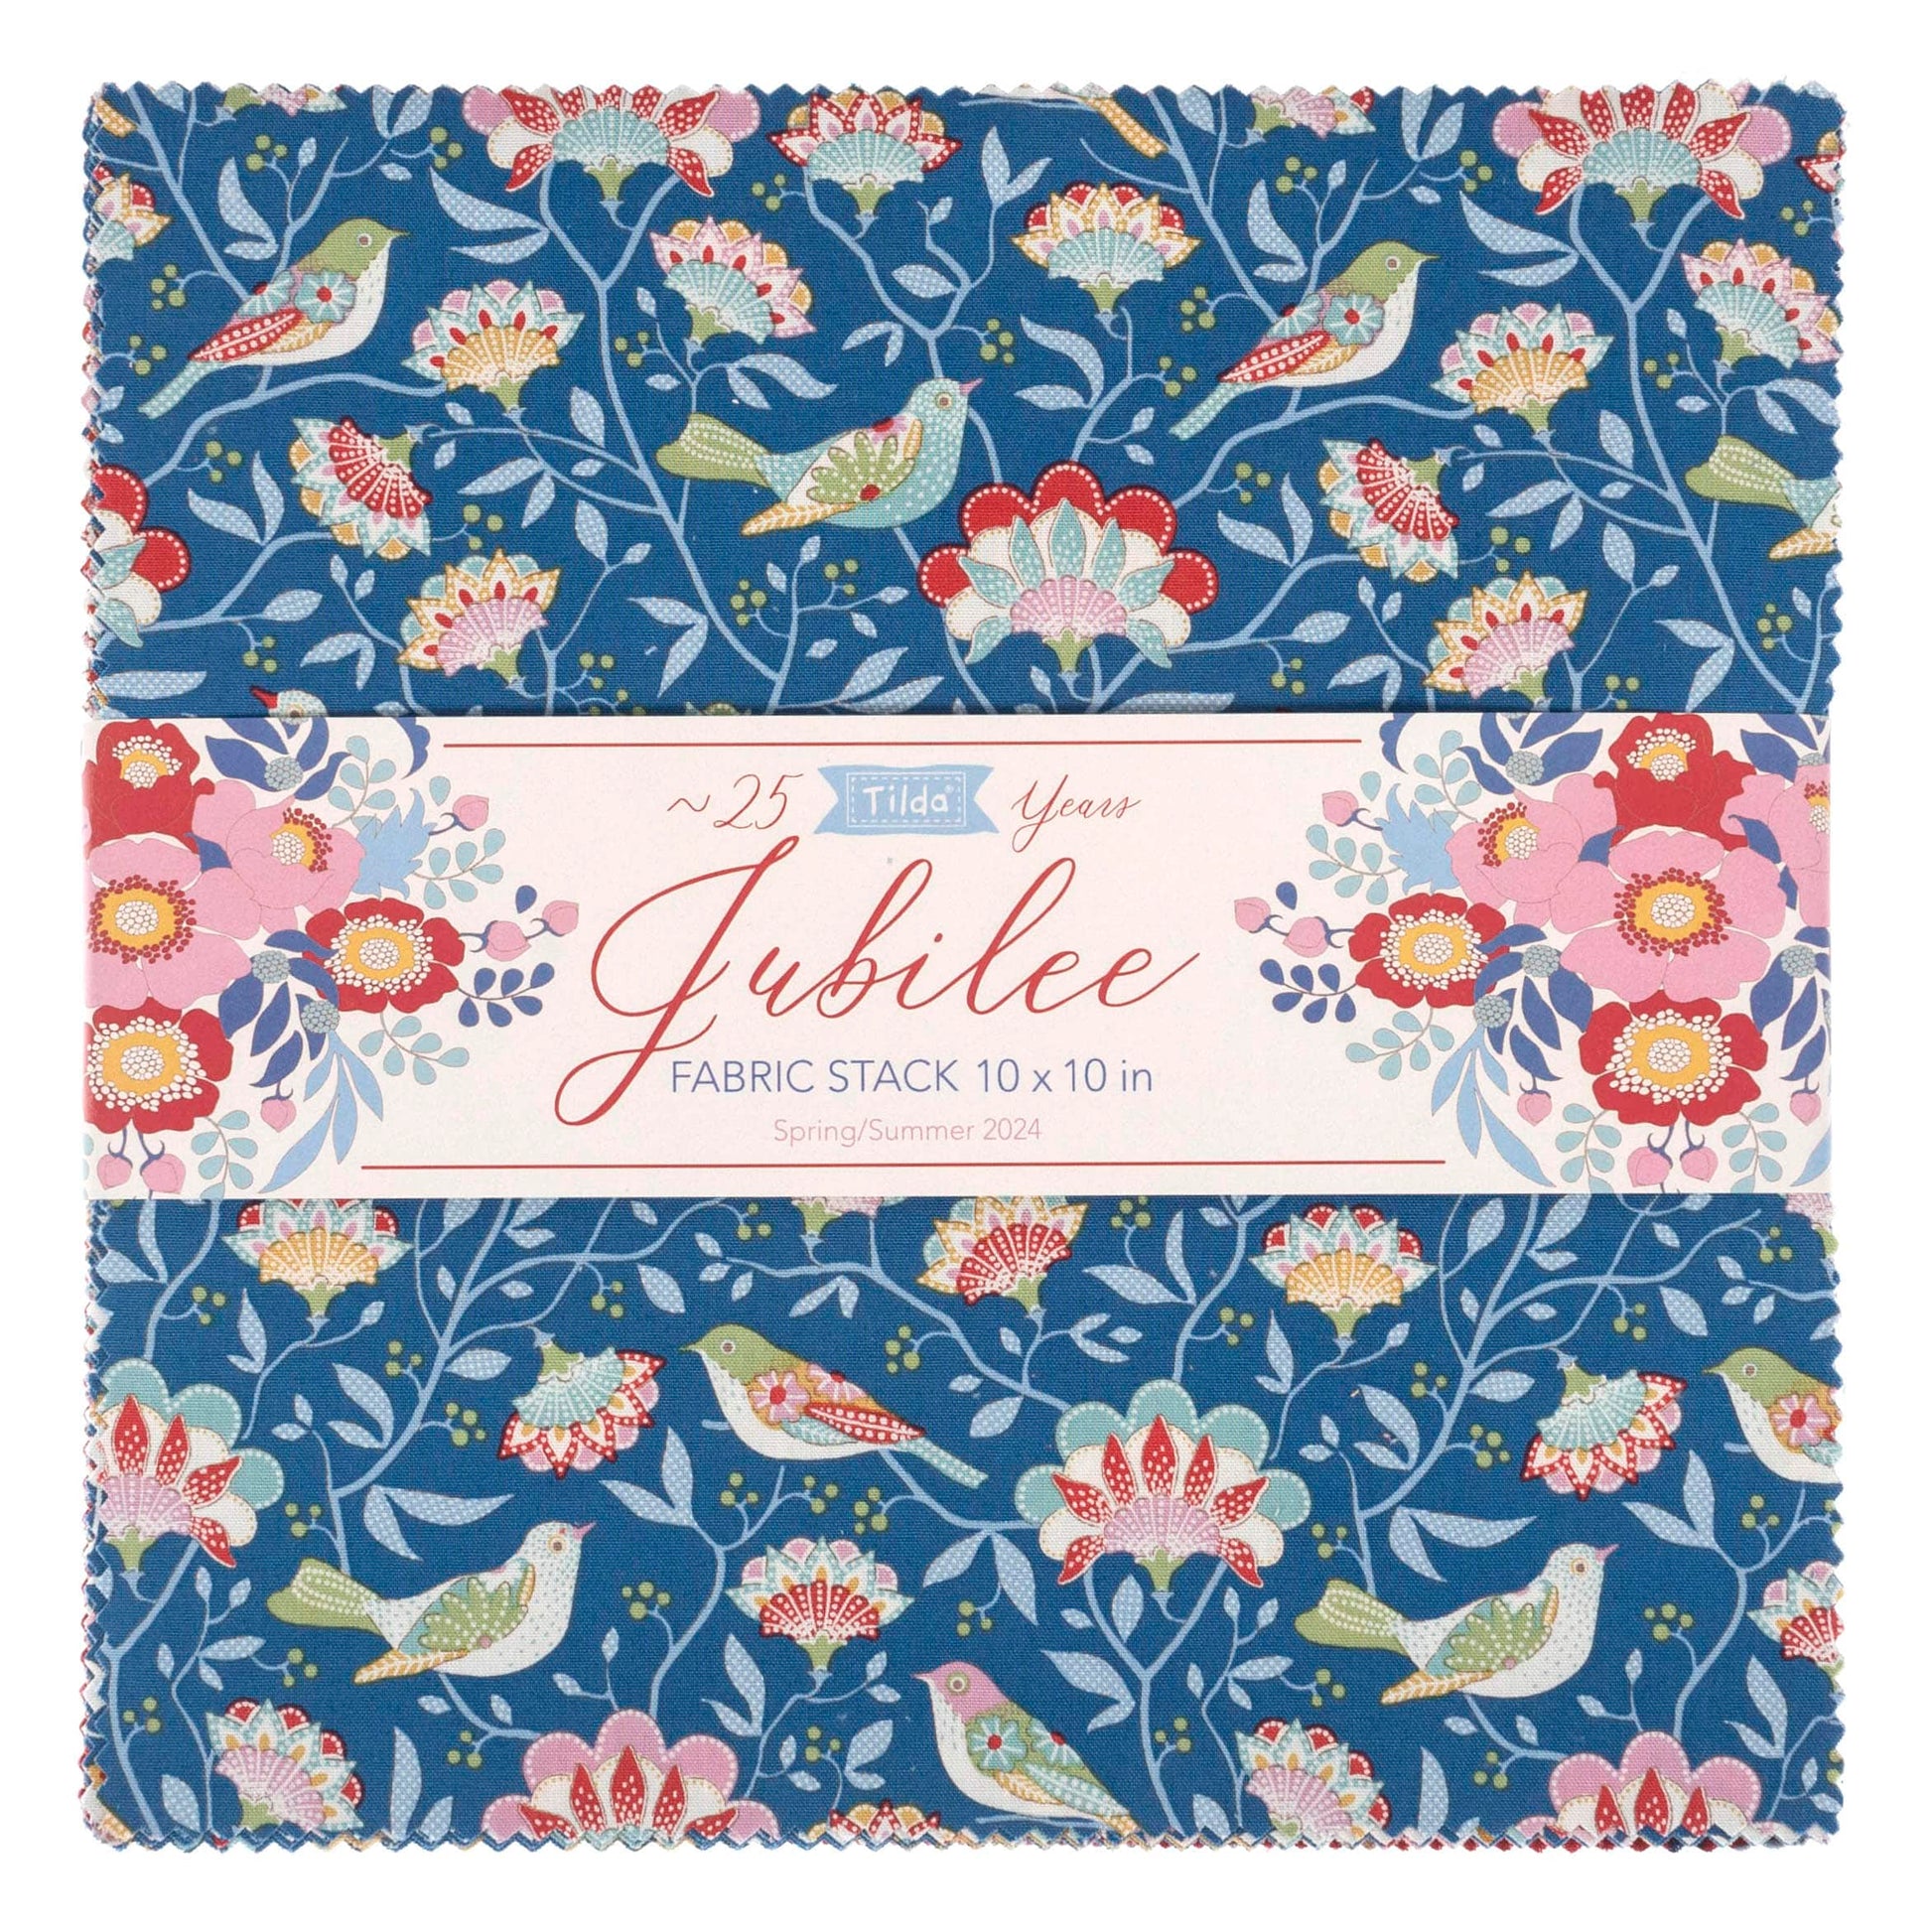 Tilda Jubilee Fabric Stack 10 Inch Squares TD300190